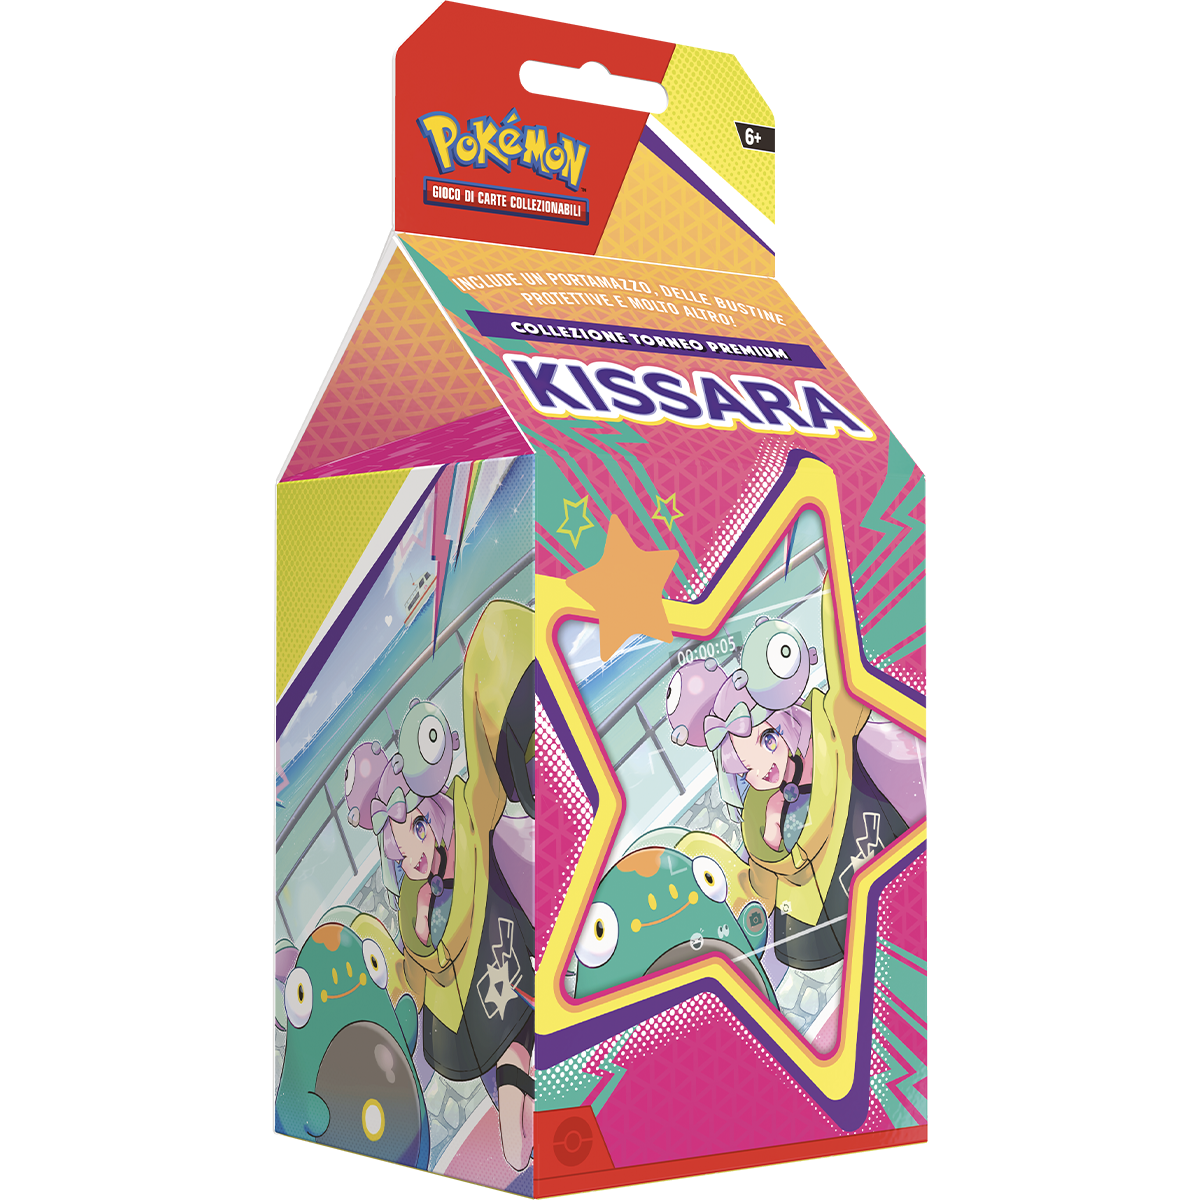 Pokémon collezione torneo premium kissara - POKEMON